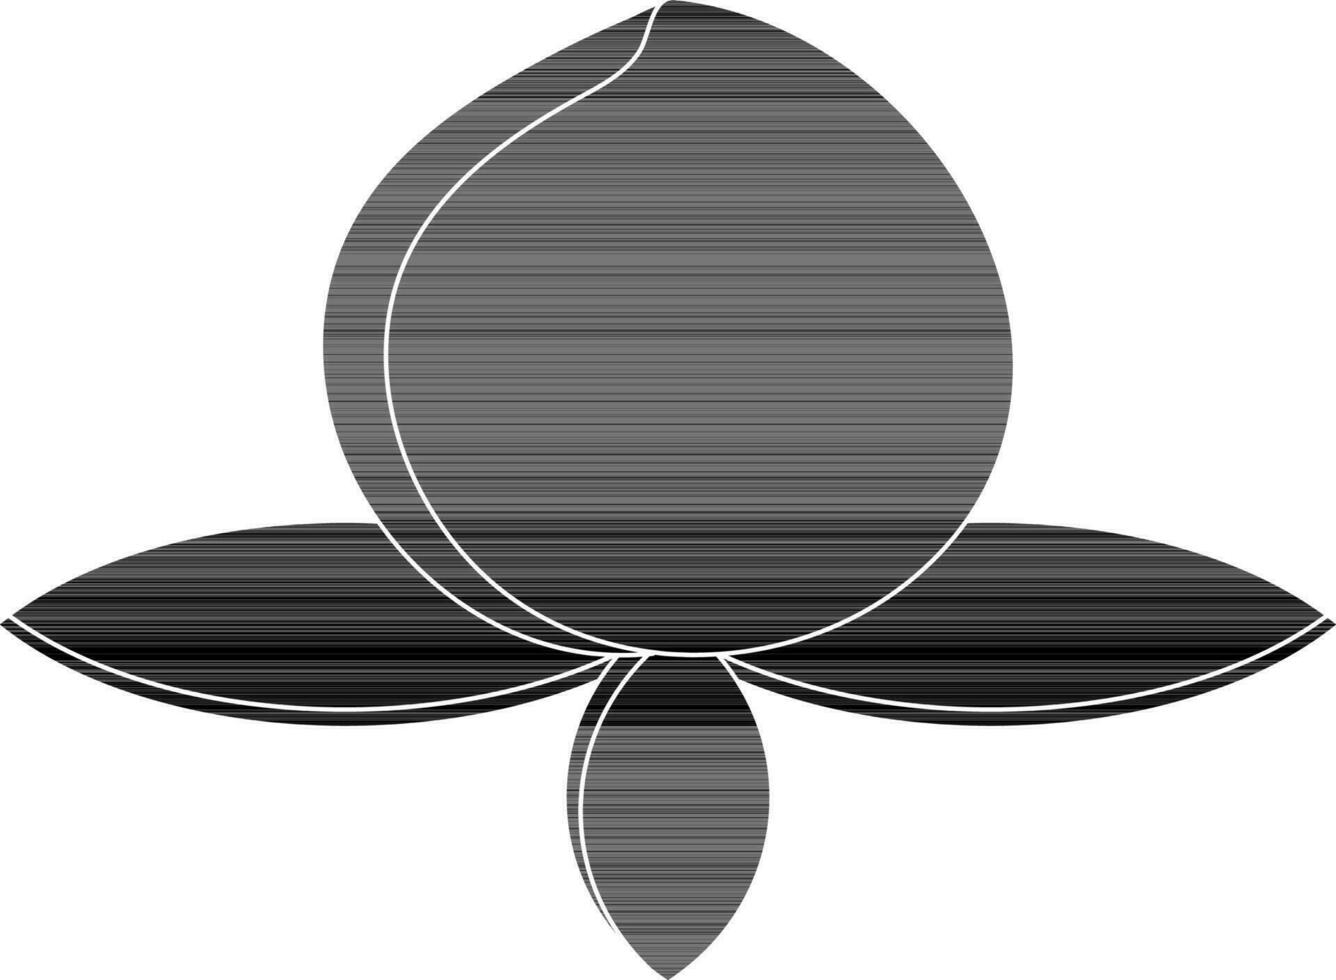 Chinesisch Pflaume Symbol zum Neu Jahr Konzept im schwarz. vektor